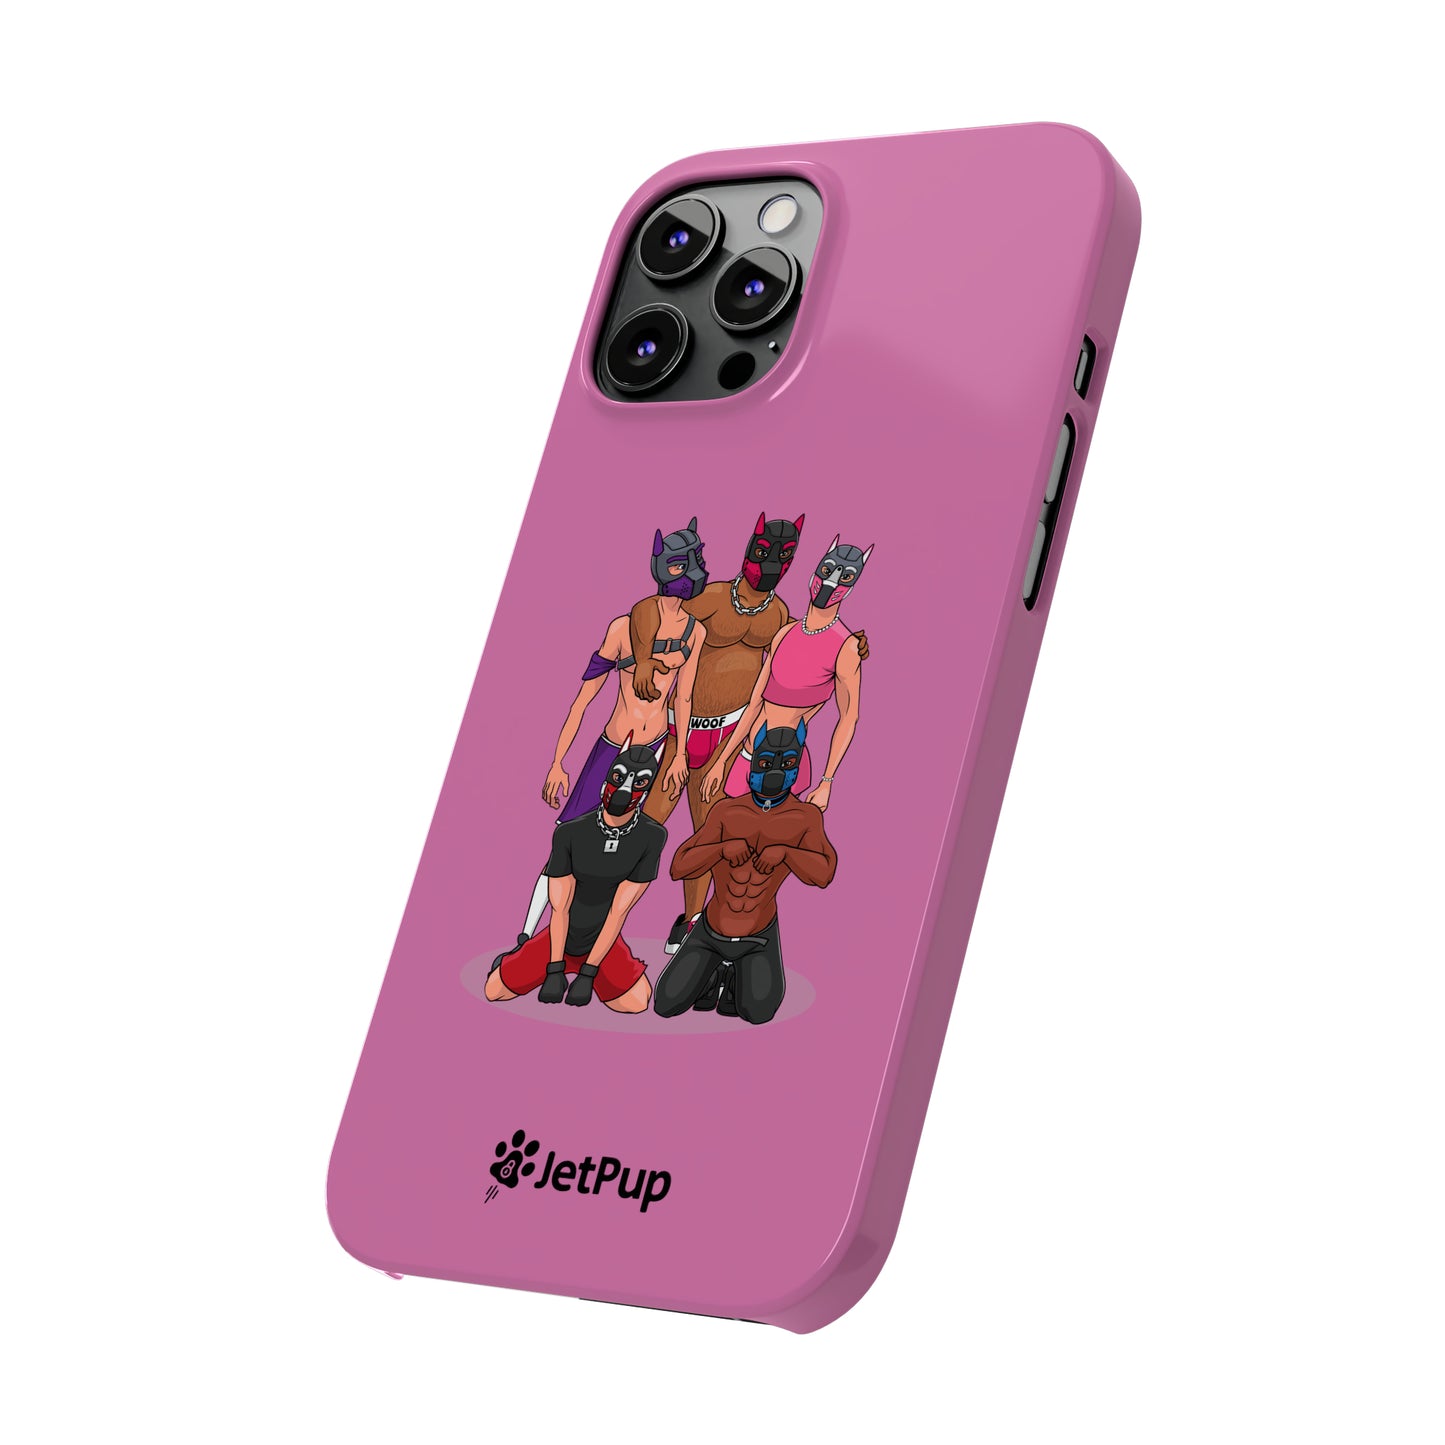 JetPack Slim iPhone Cases - Pink